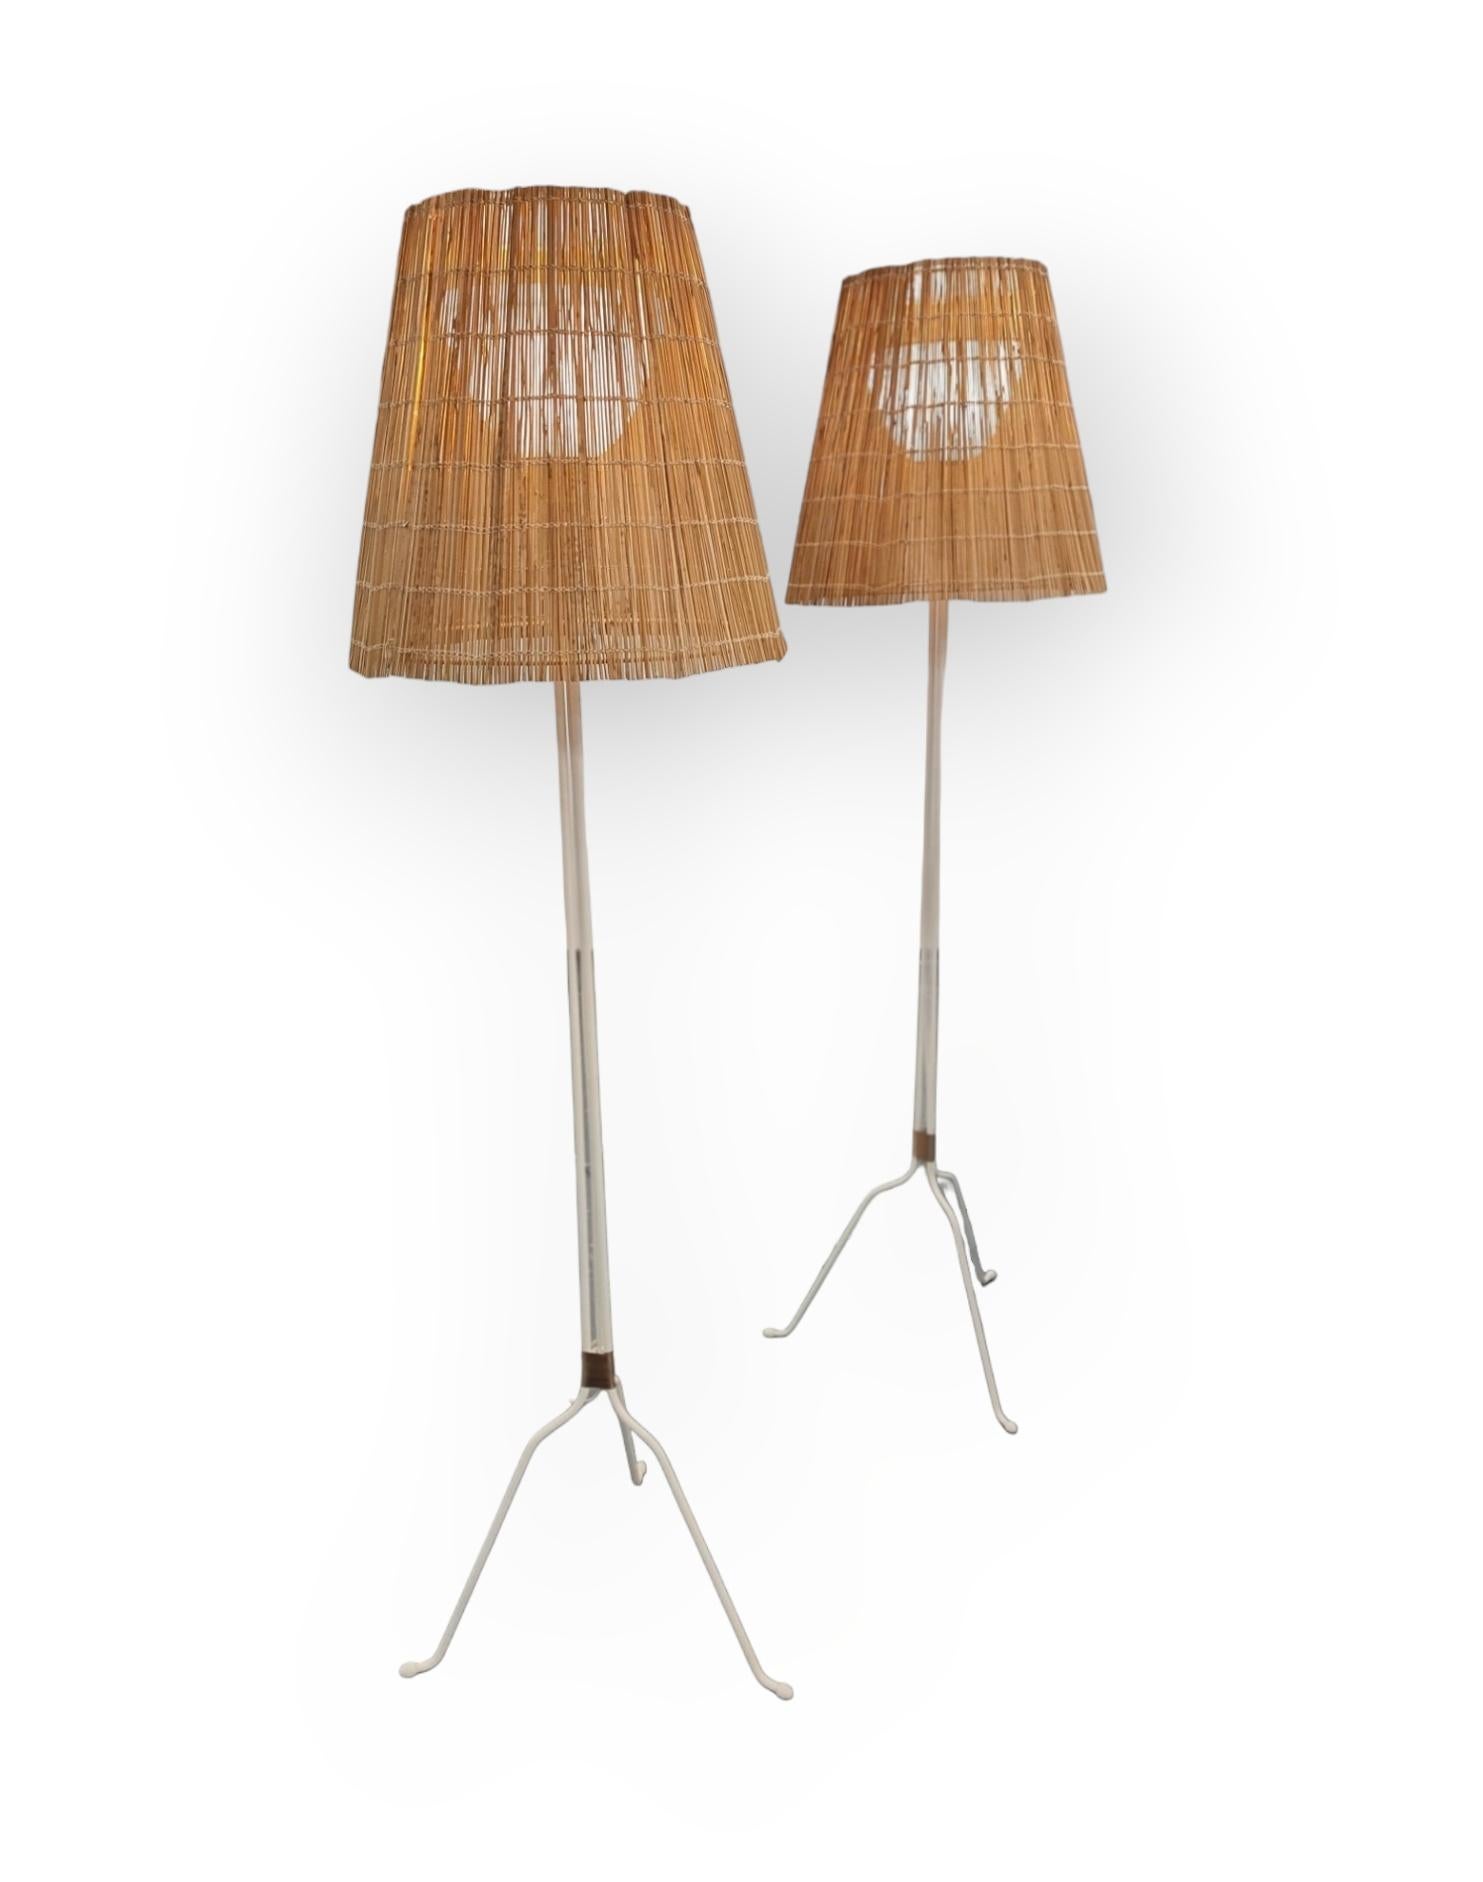 Scandinavian Modern Pair of Lisa Johansson-Papé floor lamps for Orno, model 30-058, 1950s